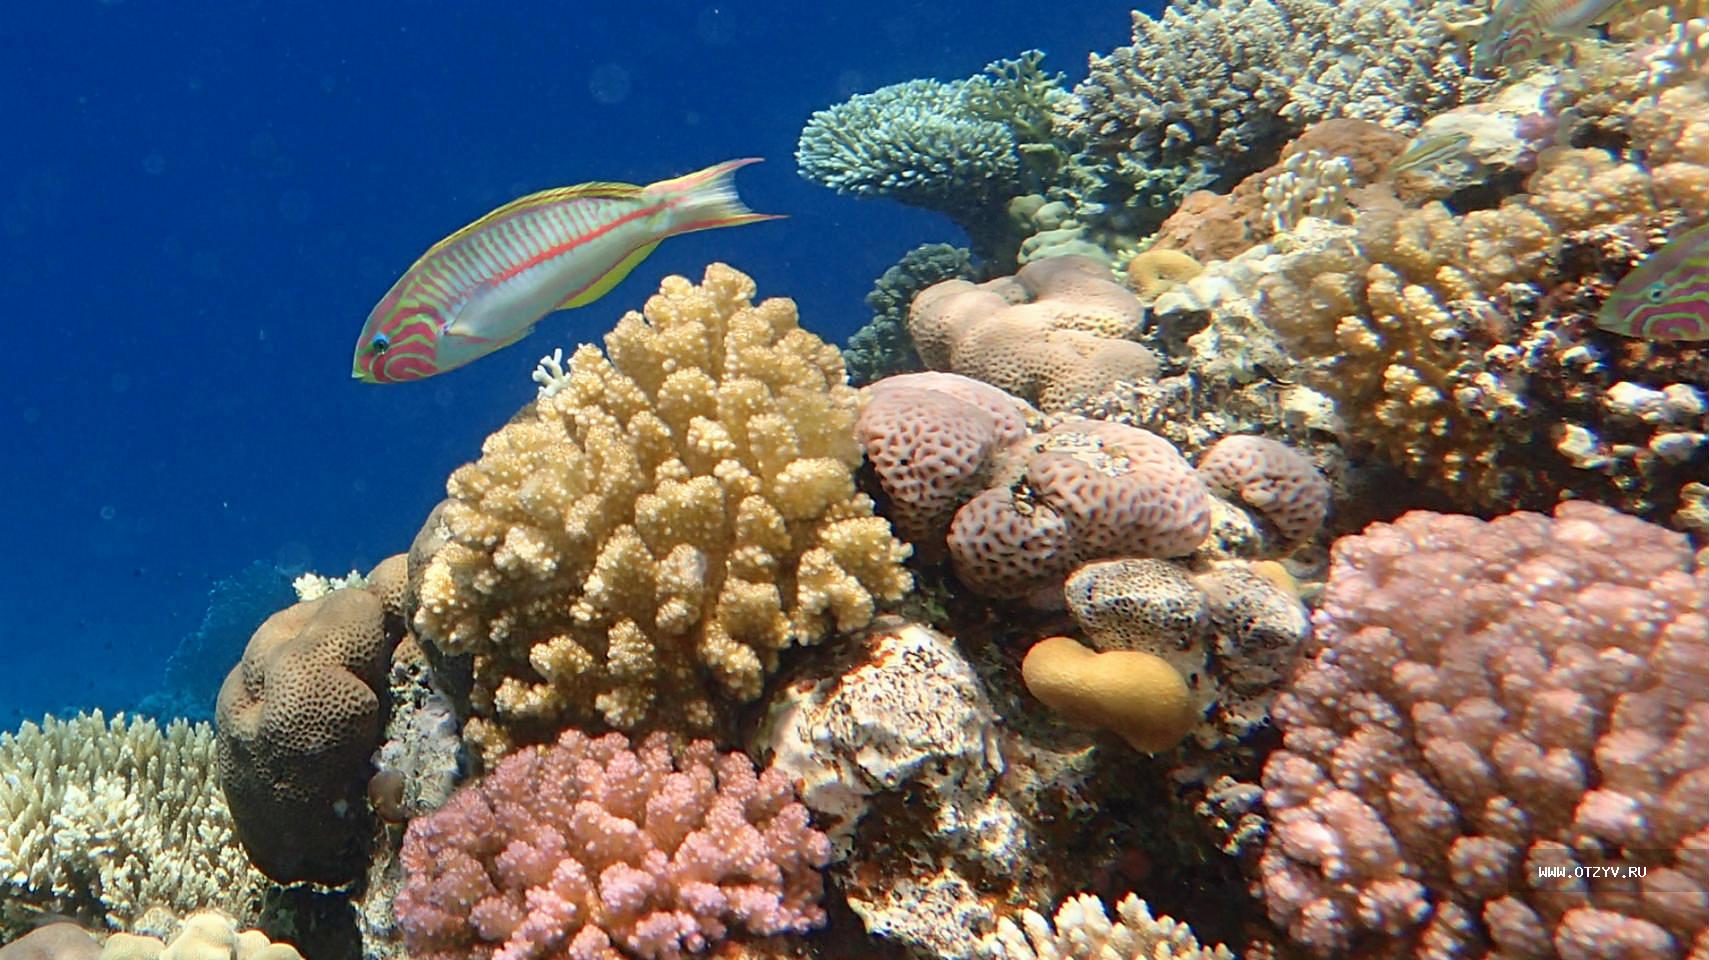 Отели шарма с коралловым рифом. Риф Шарм-Эль-Шейх. Риф в Египте Шарм-Эль-Шейх. Риф Лагуна Шарм Эль Шейх. Коралловый риф в Шарм Эль Шейхе.